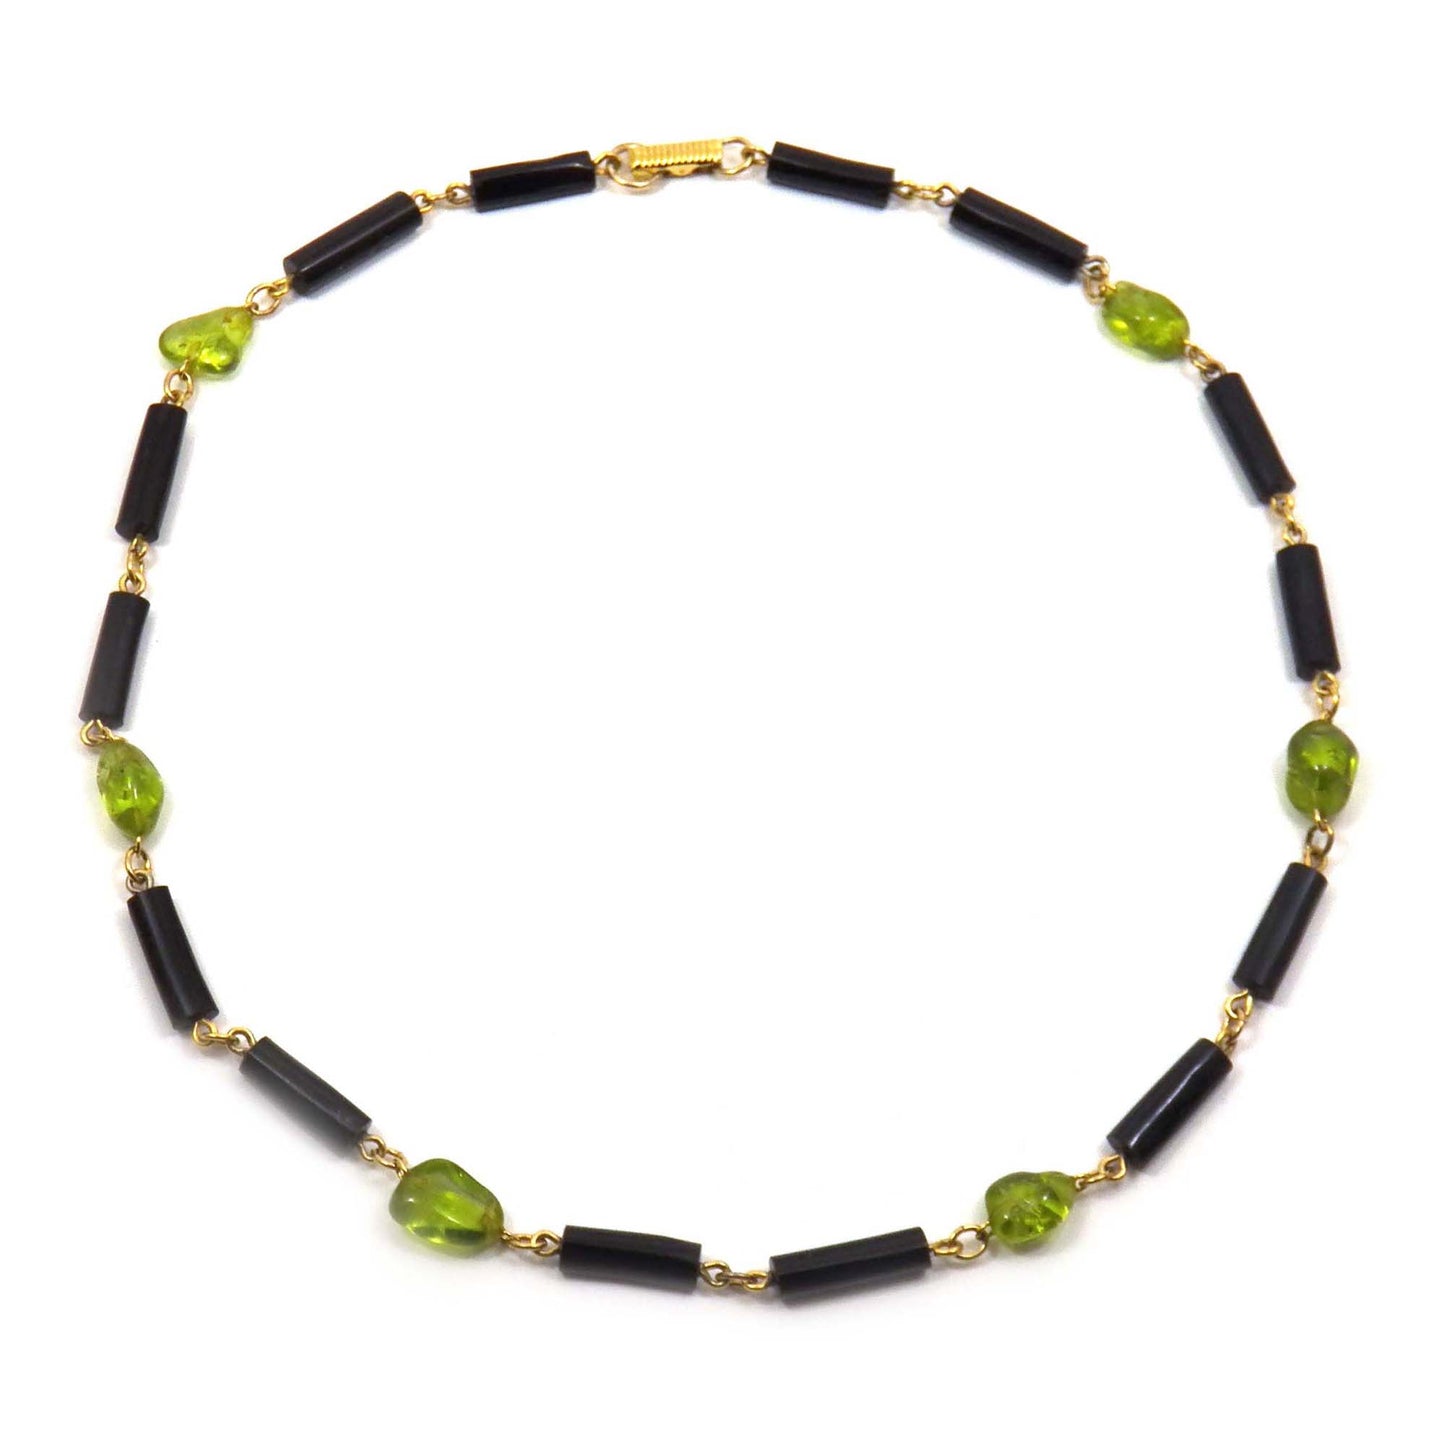 Gemstone beaded necklace, Black coral jewelry